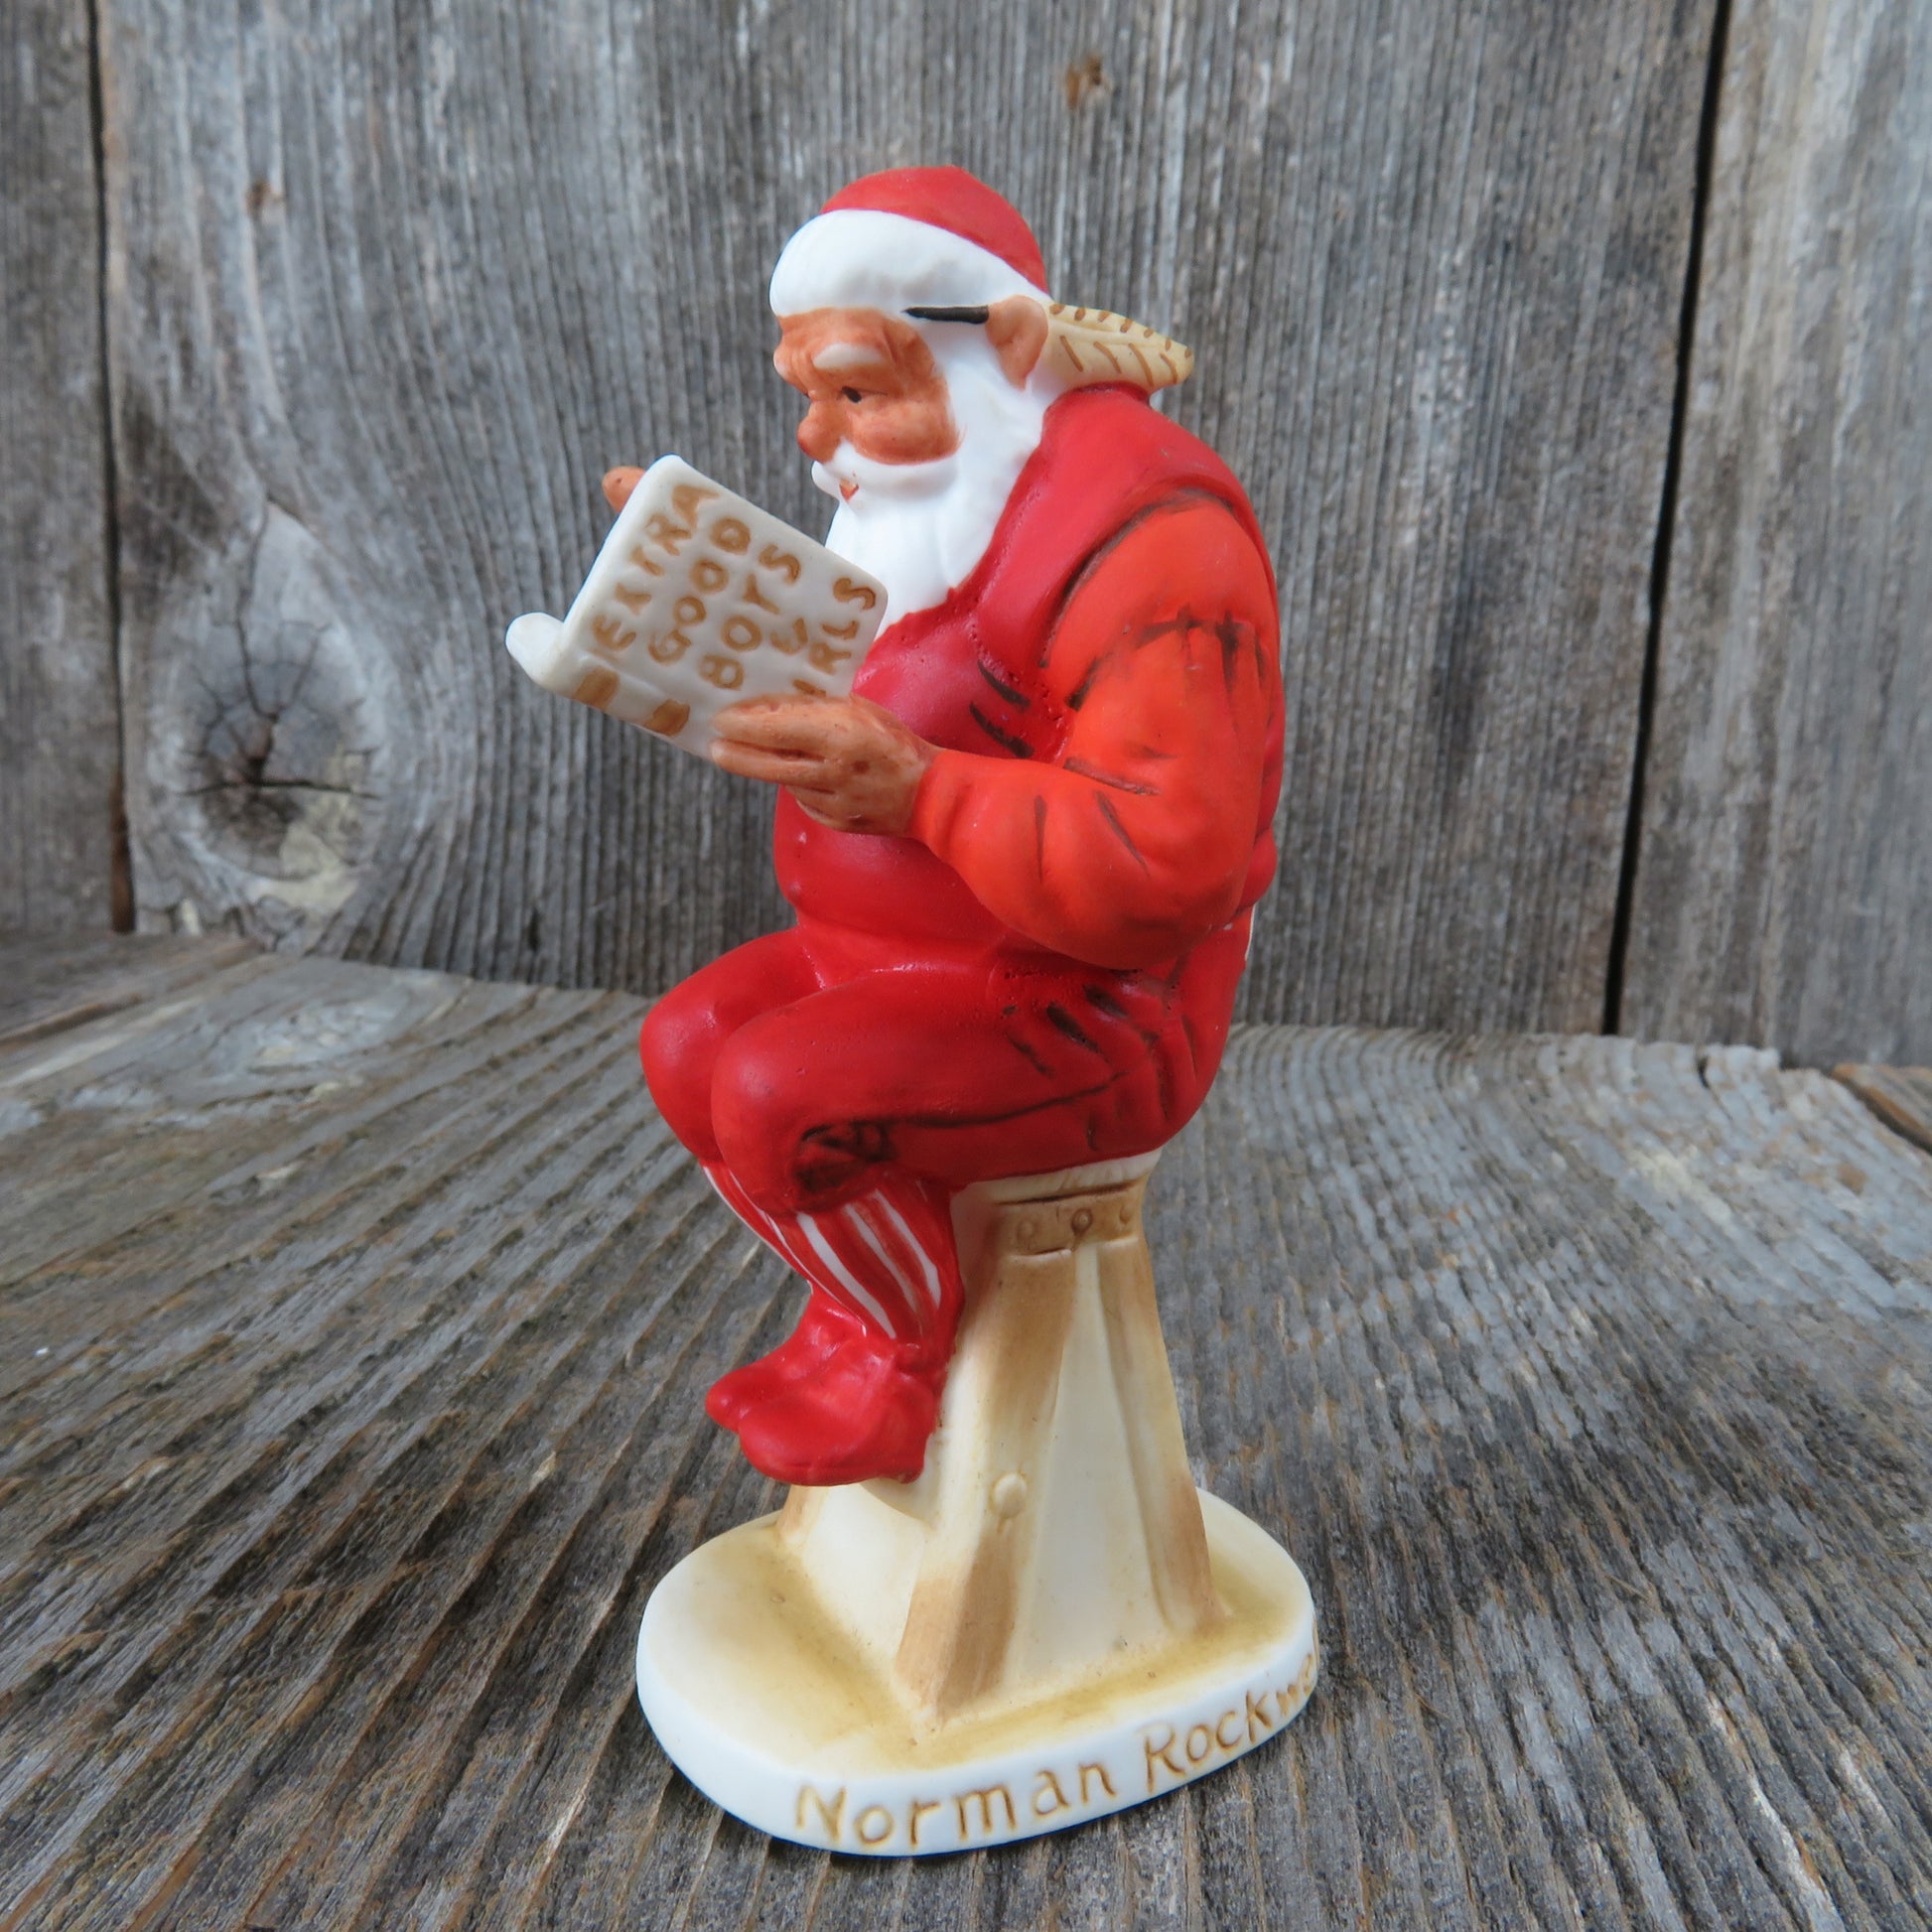 Vintage Santa Christmas Ceramic Figurine Gorham Bisque Porcelain Santa Plans His Visit - At Grandma's Table